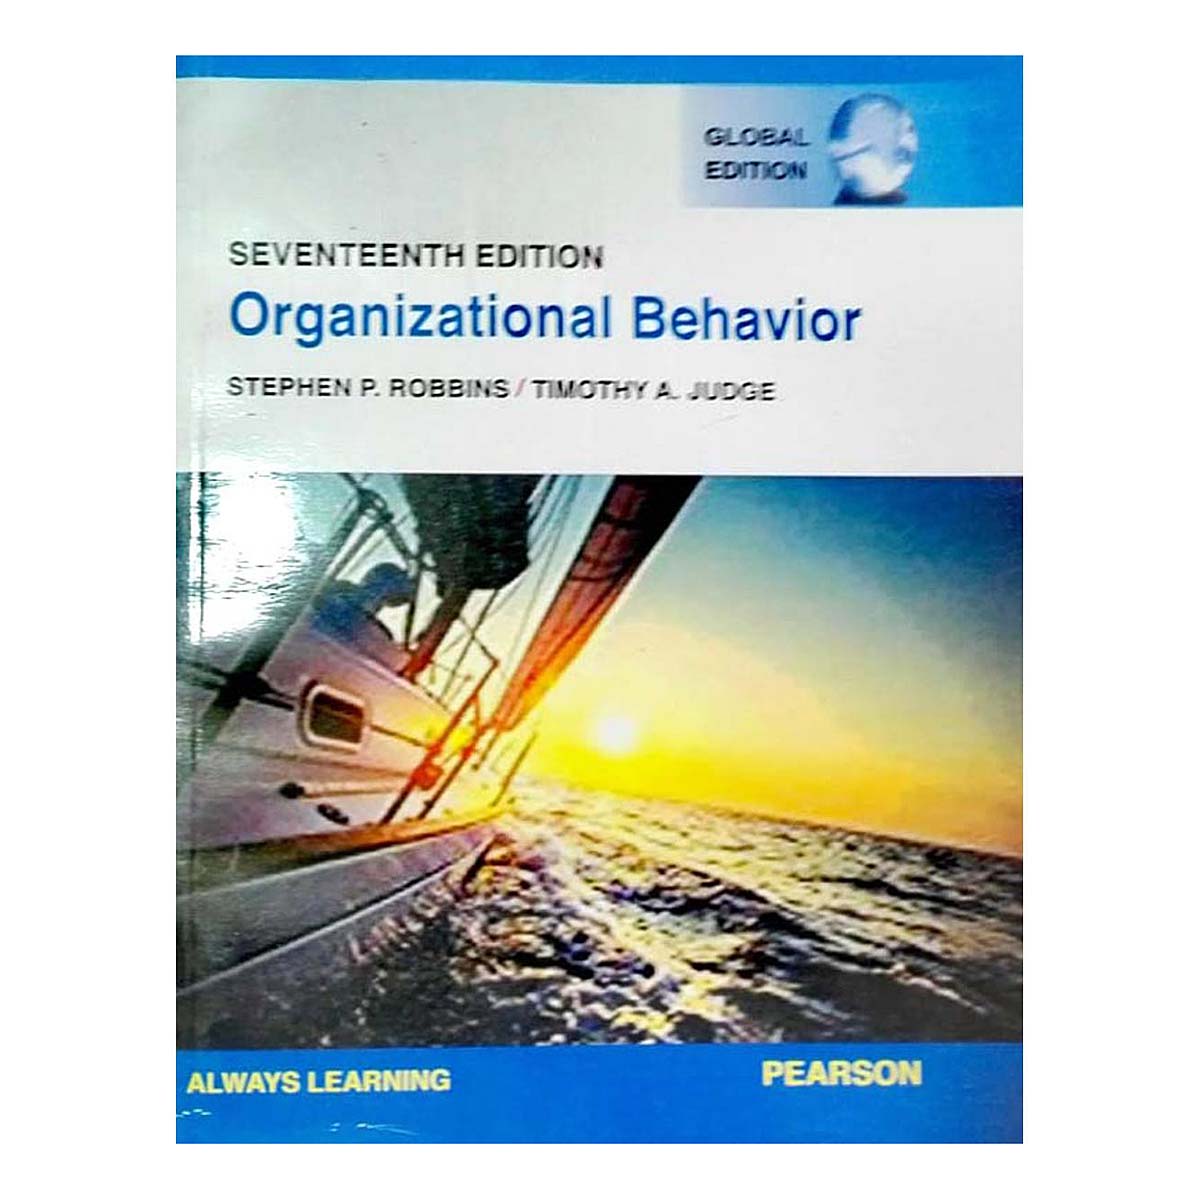 Organizational Behavior 17th Edition Stephen P. Robbins. Timothy A. Juddge (Pearson)